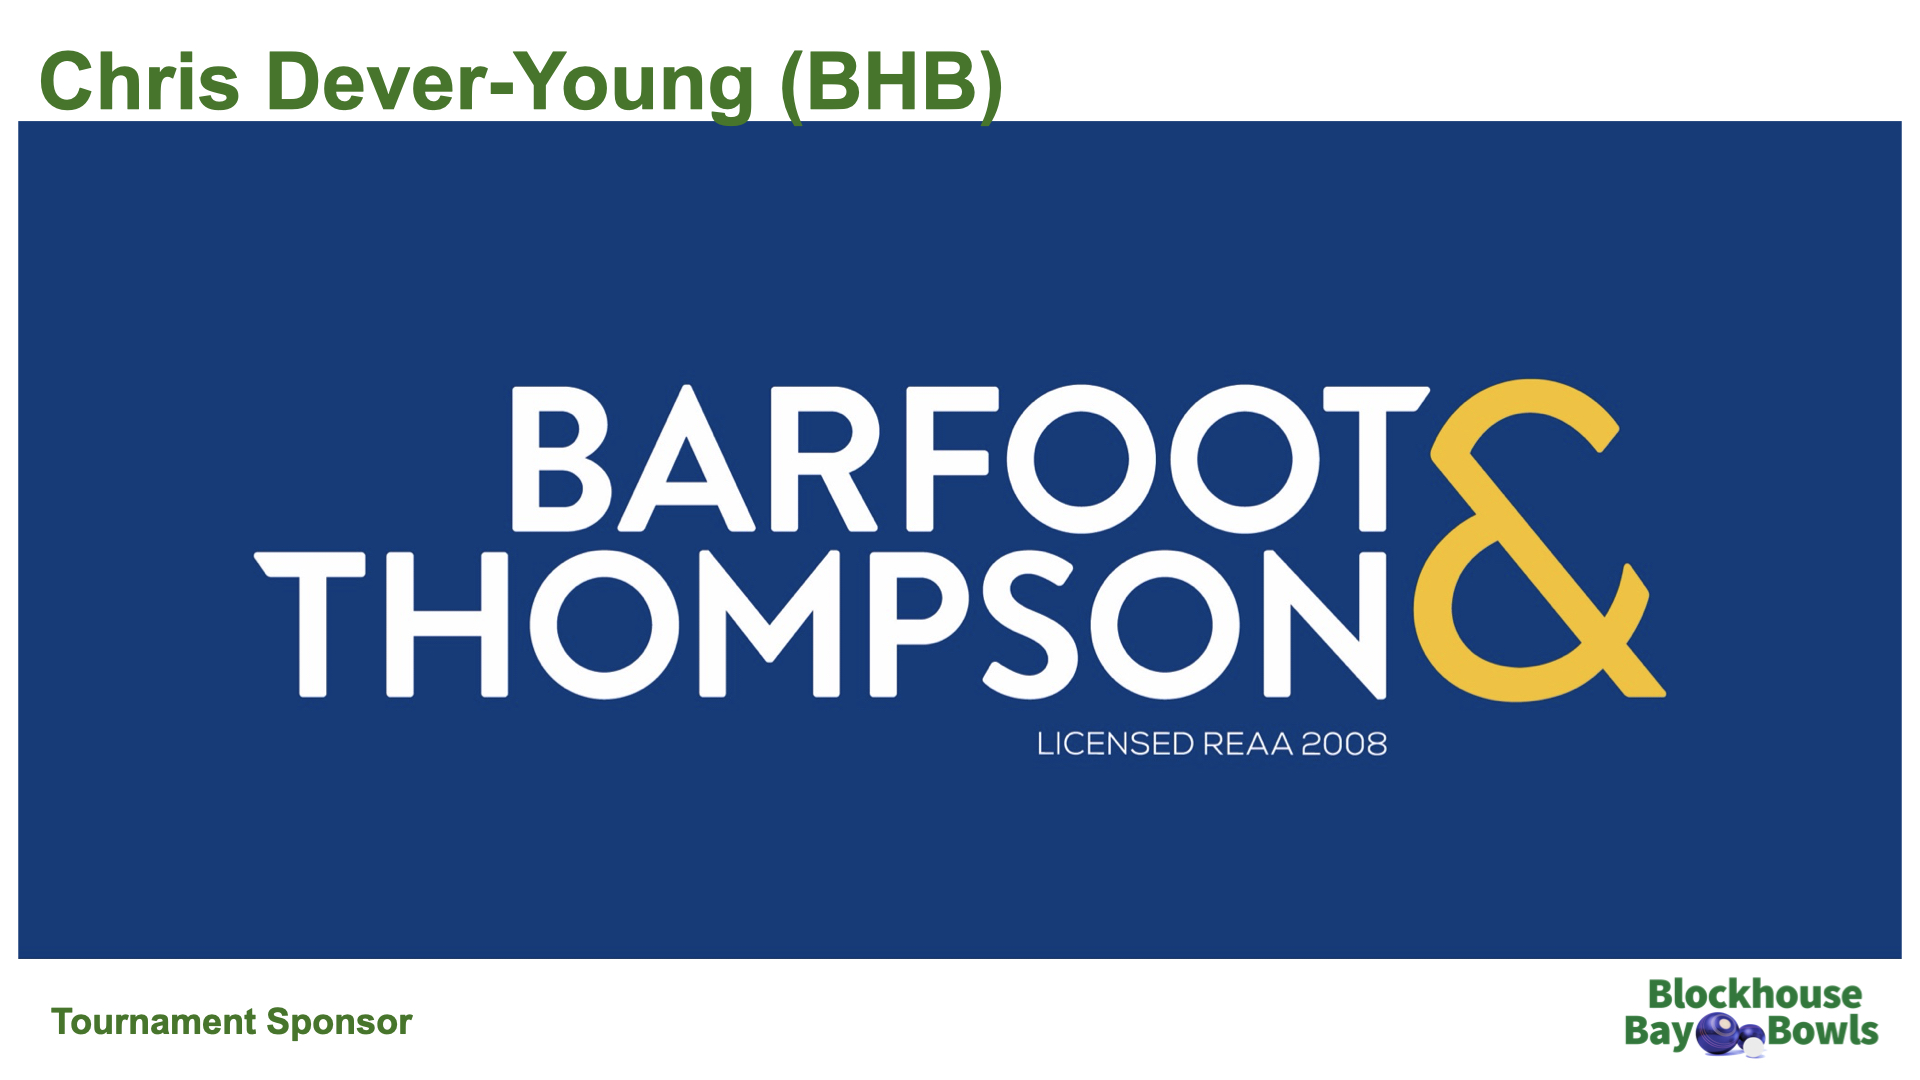 Barfoot & Thompson (BHB) - Chris Dever-Young